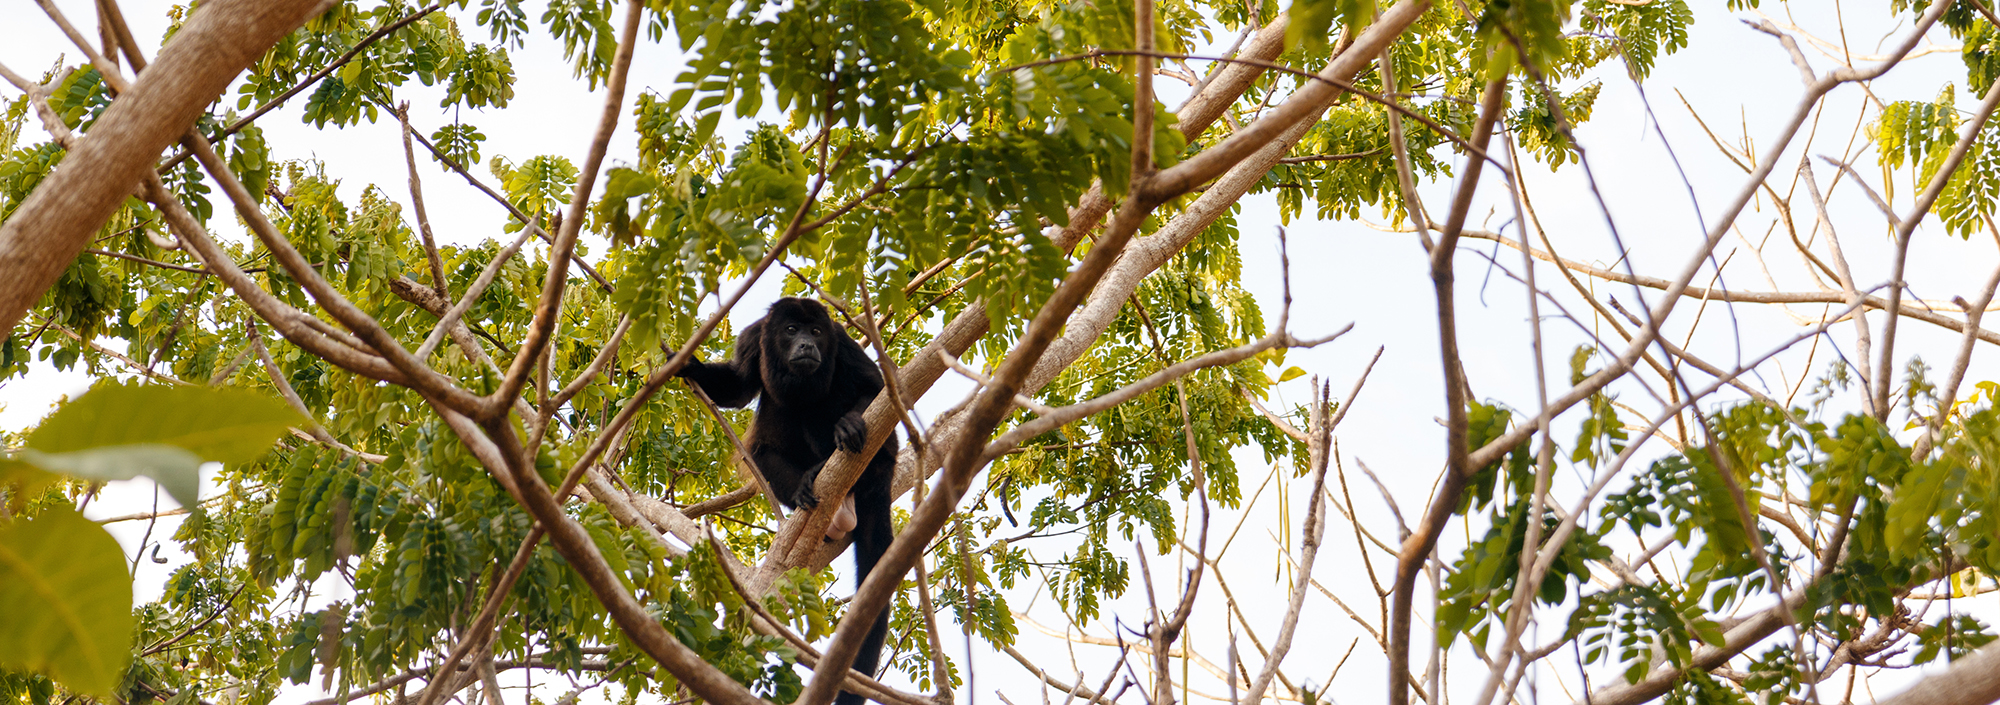 Brüllaffe in Guanacaste in Costa Rica im Trockenwaldbaum